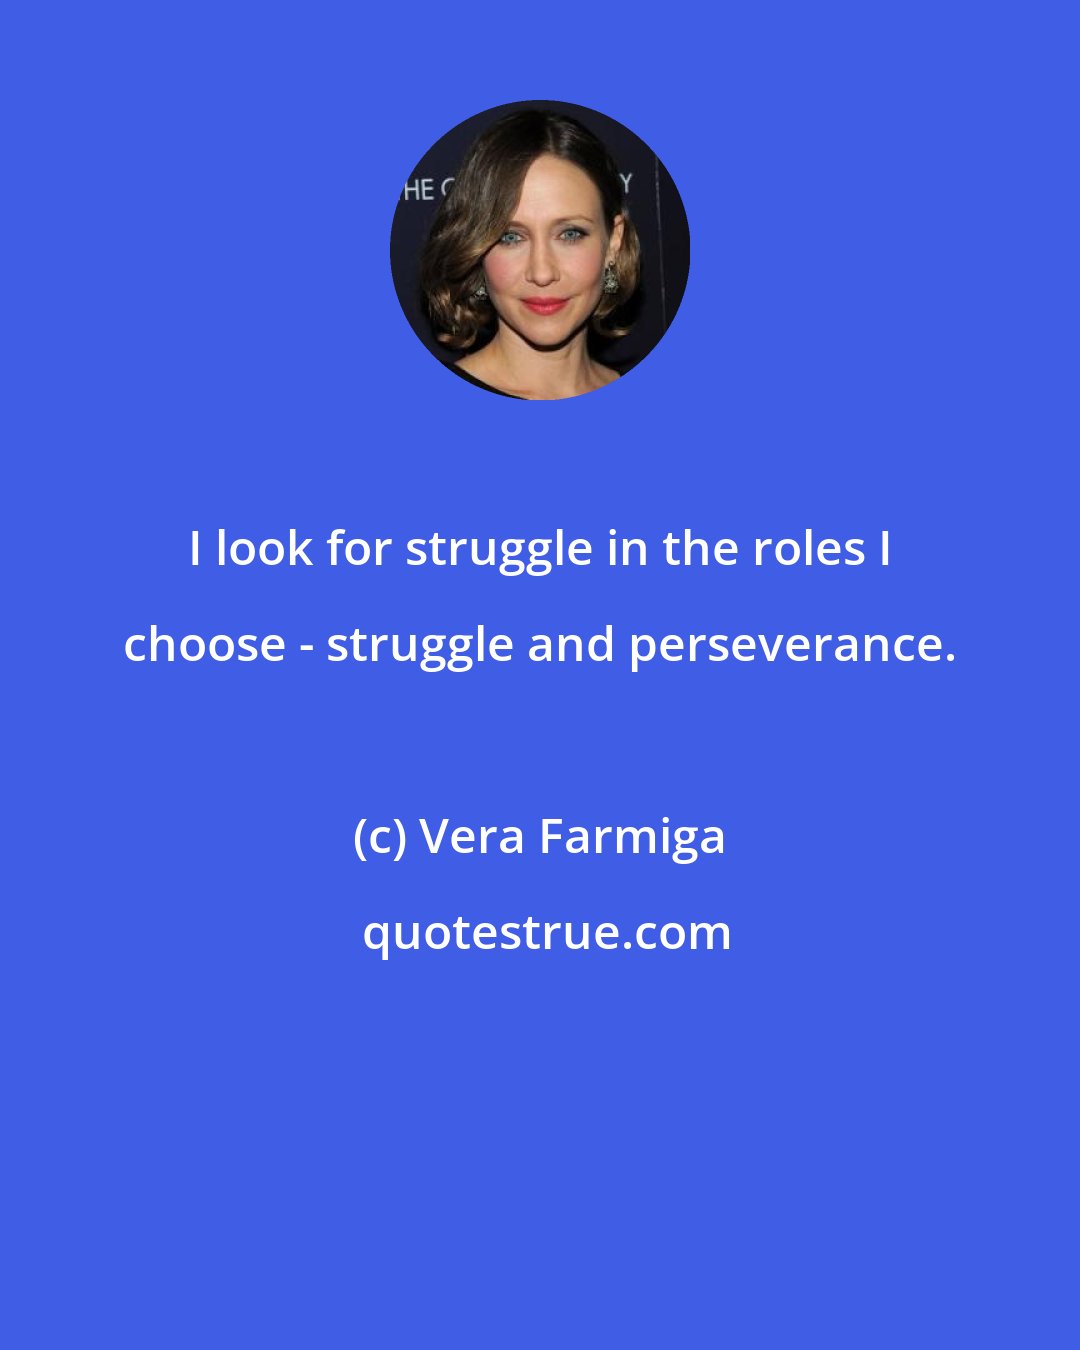 Vera Farmiga: I look for struggle in the roles I choose - struggle and perseverance.